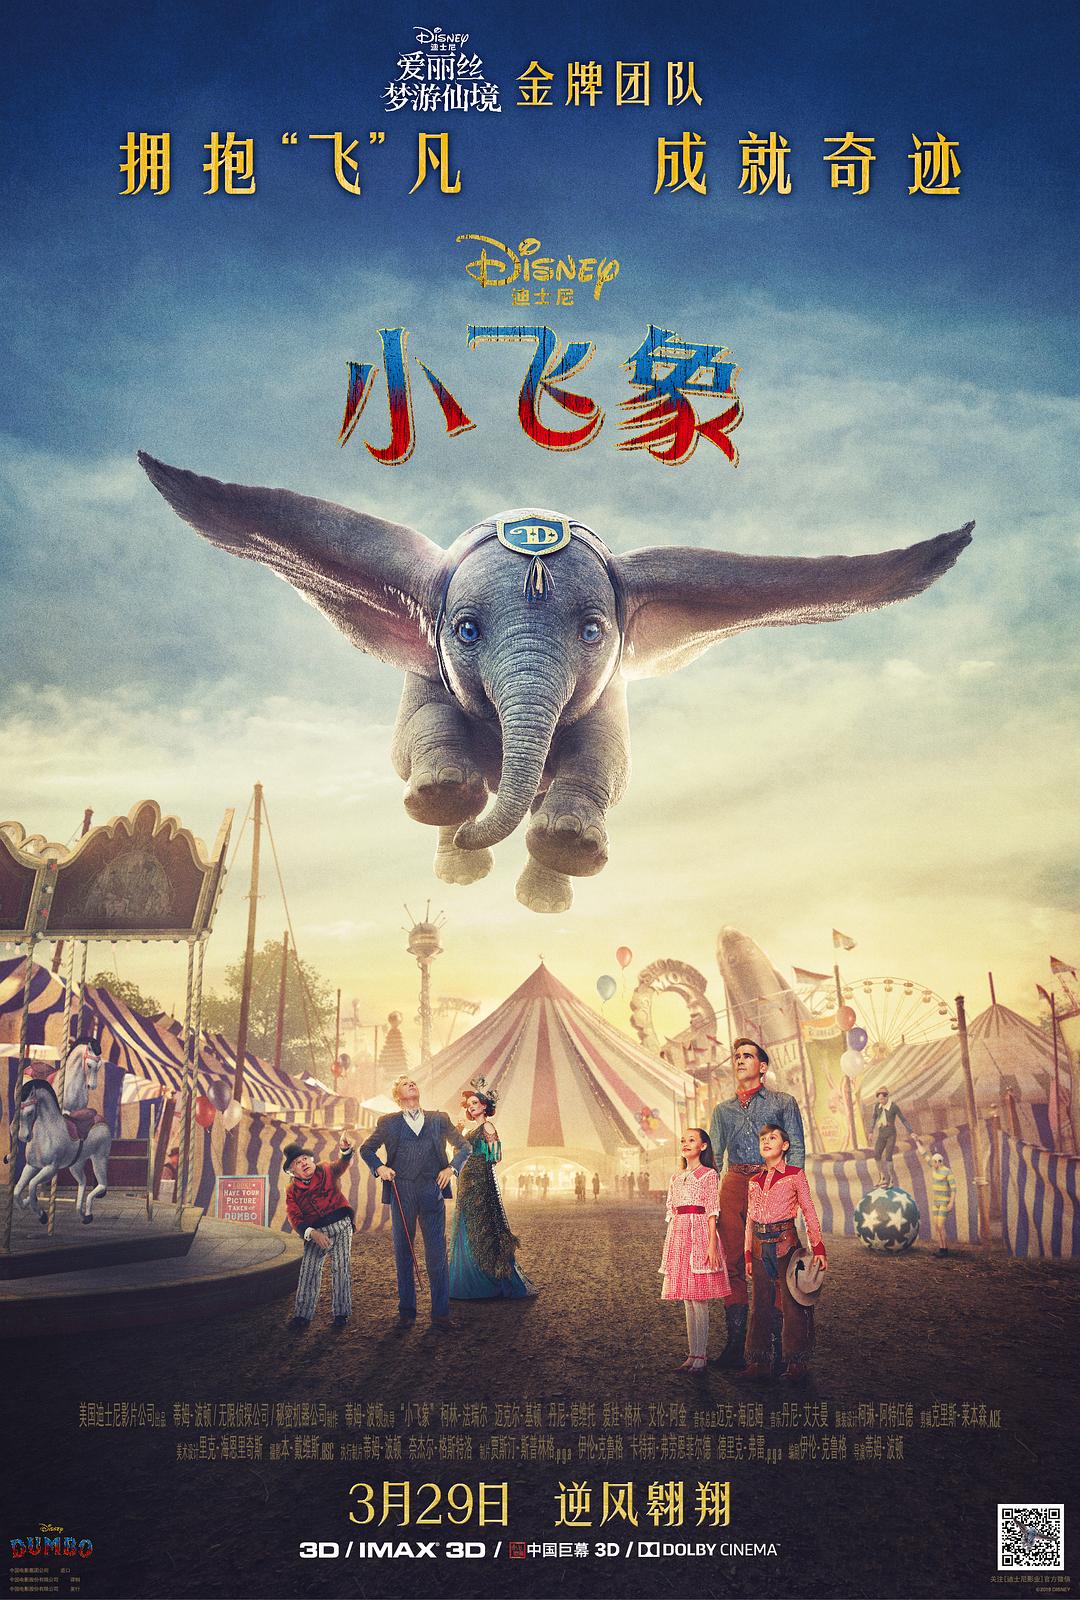 小飞象/小飞象真人版 Dumbo.2019.1080p.BluRay.REMUX.AVC.DTS-HD.MA.TrueHD.7.1.Atmos-FGT 33.26GB-1.png